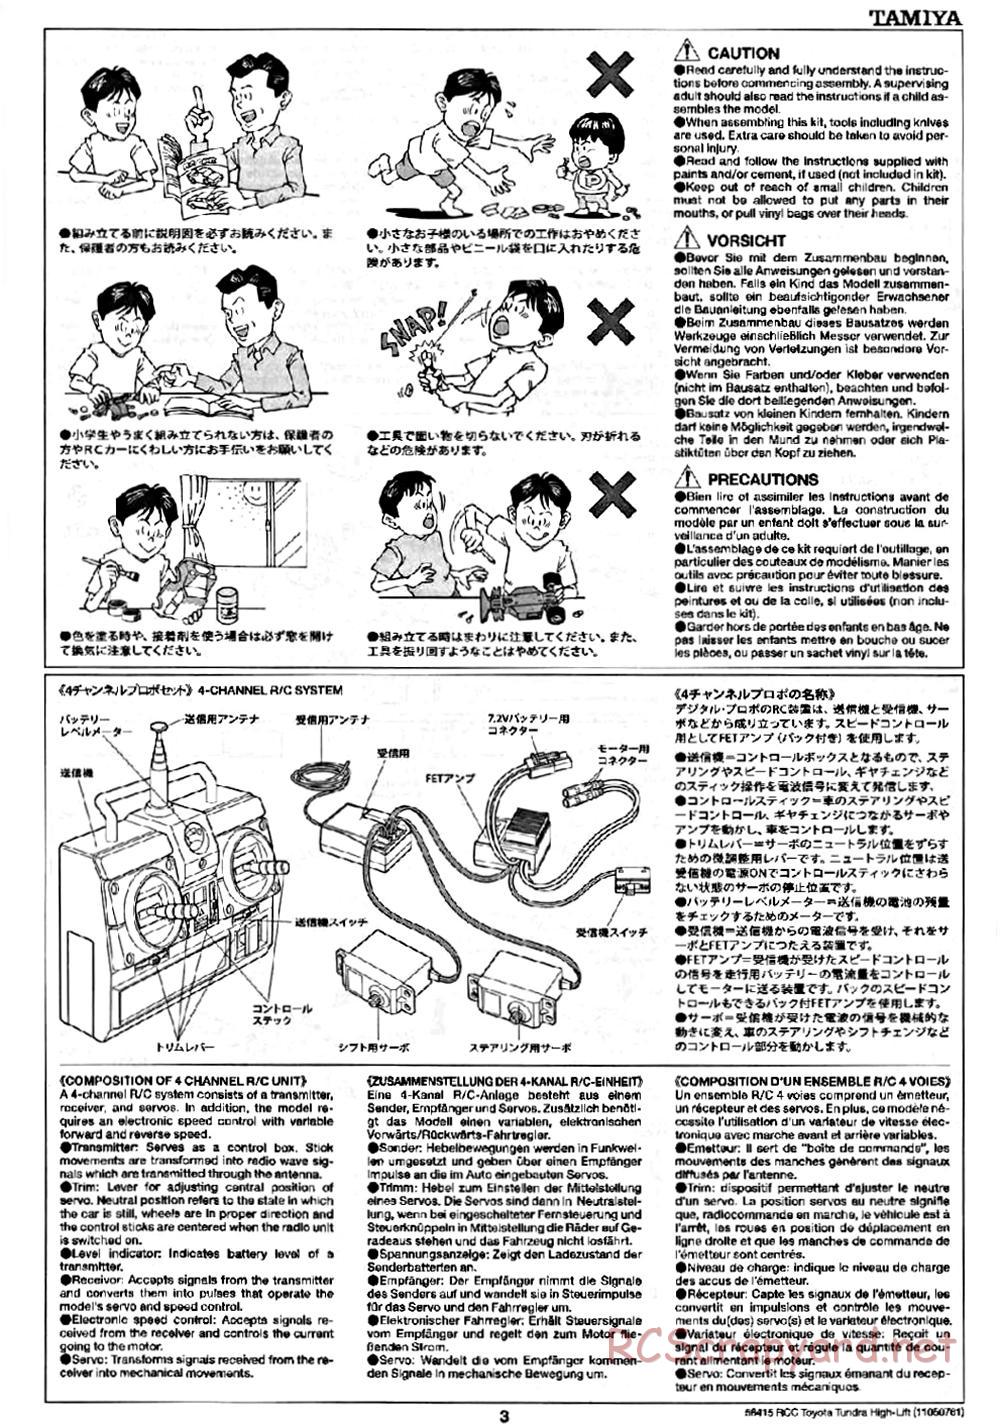 Tamiya - Toyota Tundra High-Lift Chassis - Manual - Page 3